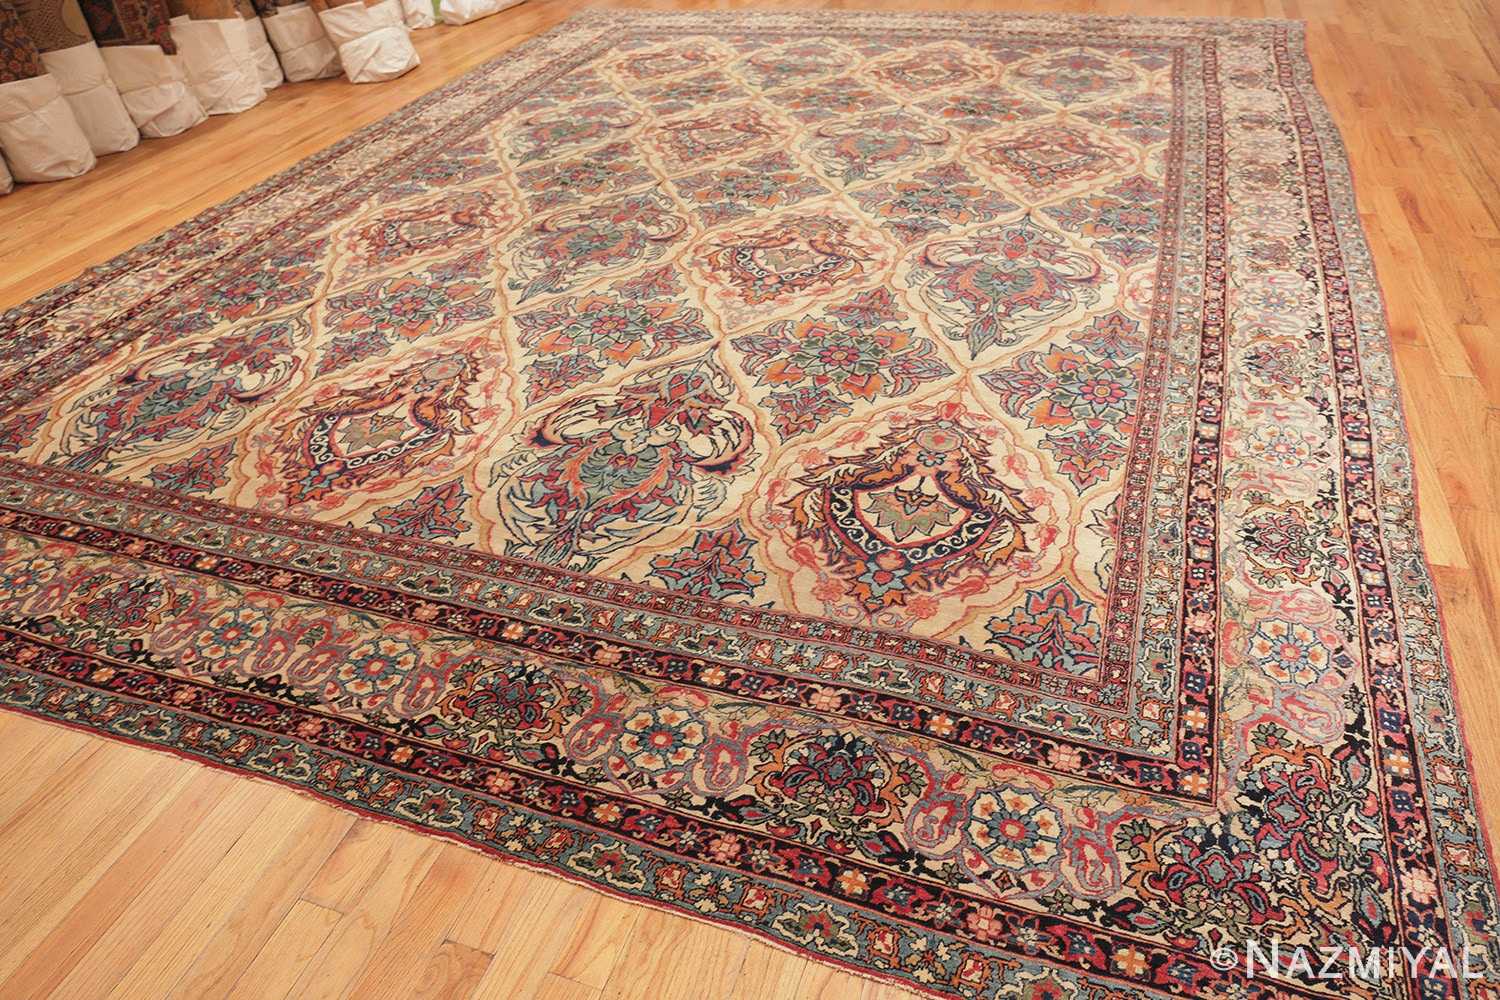 Full Antique Persian Kerman rug 70219 by Nazmiyal